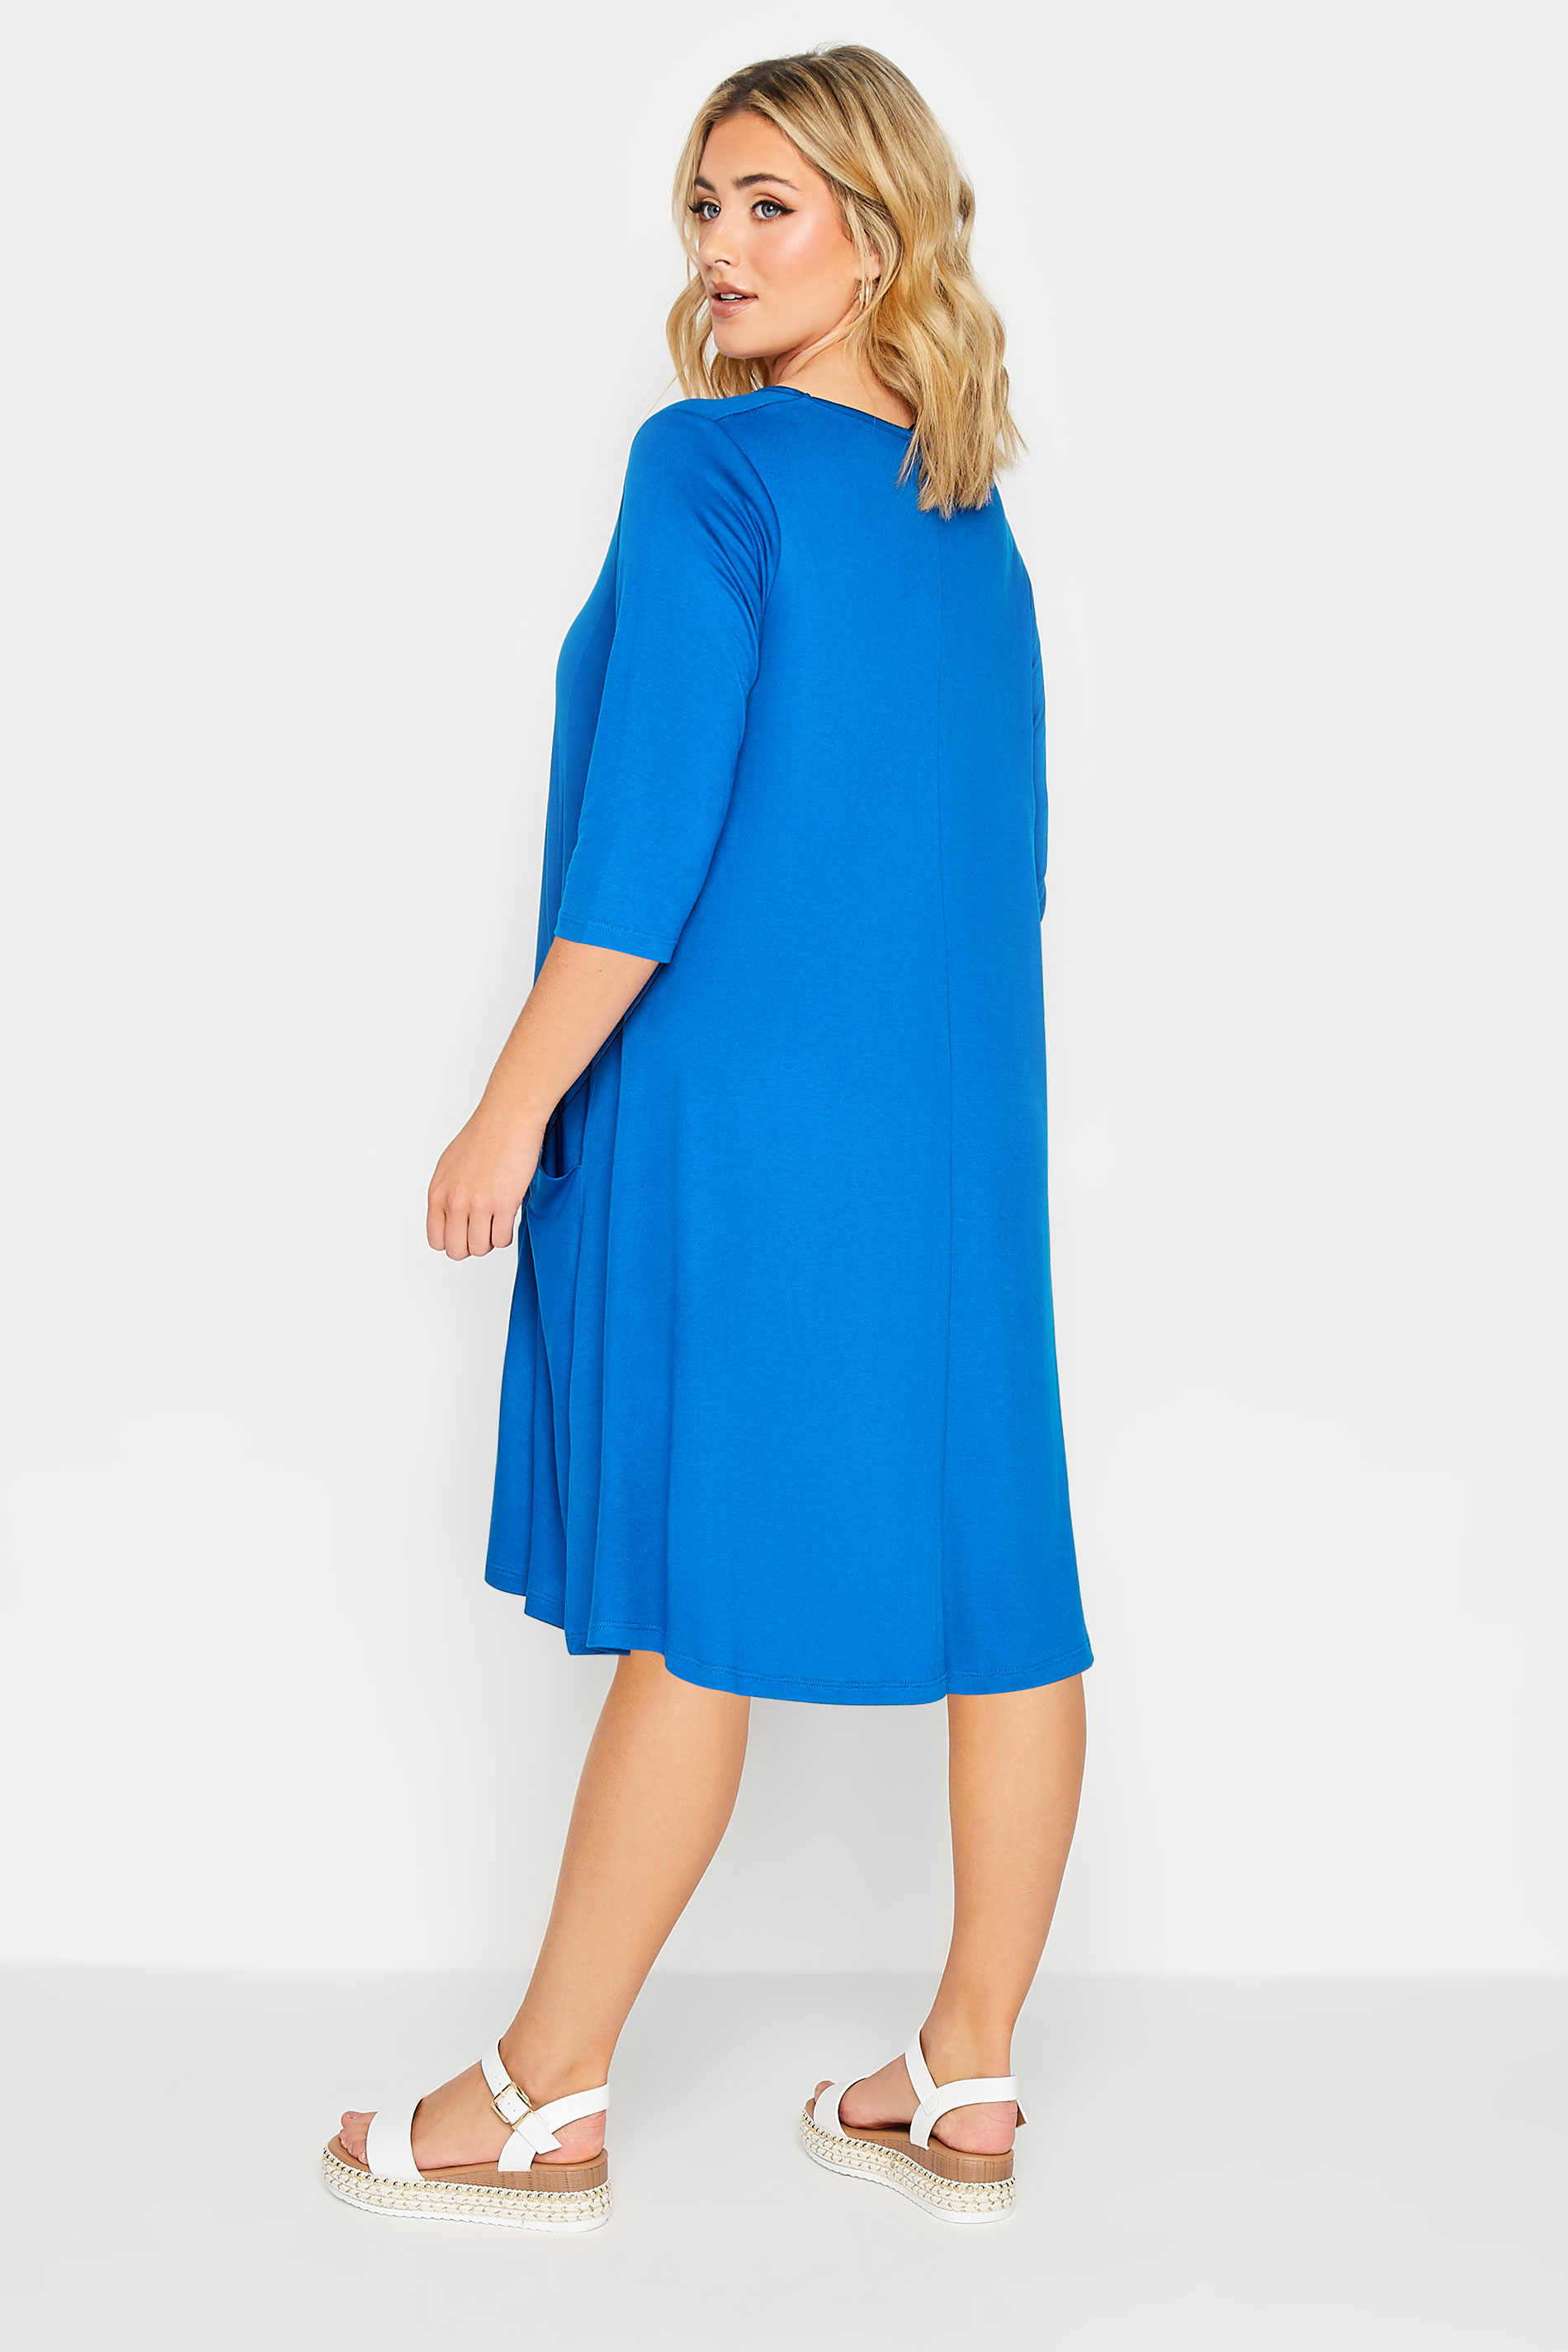 YOURS Plus Size Cobalt Blue Drape Pocket Dress | Yours Clothing 3